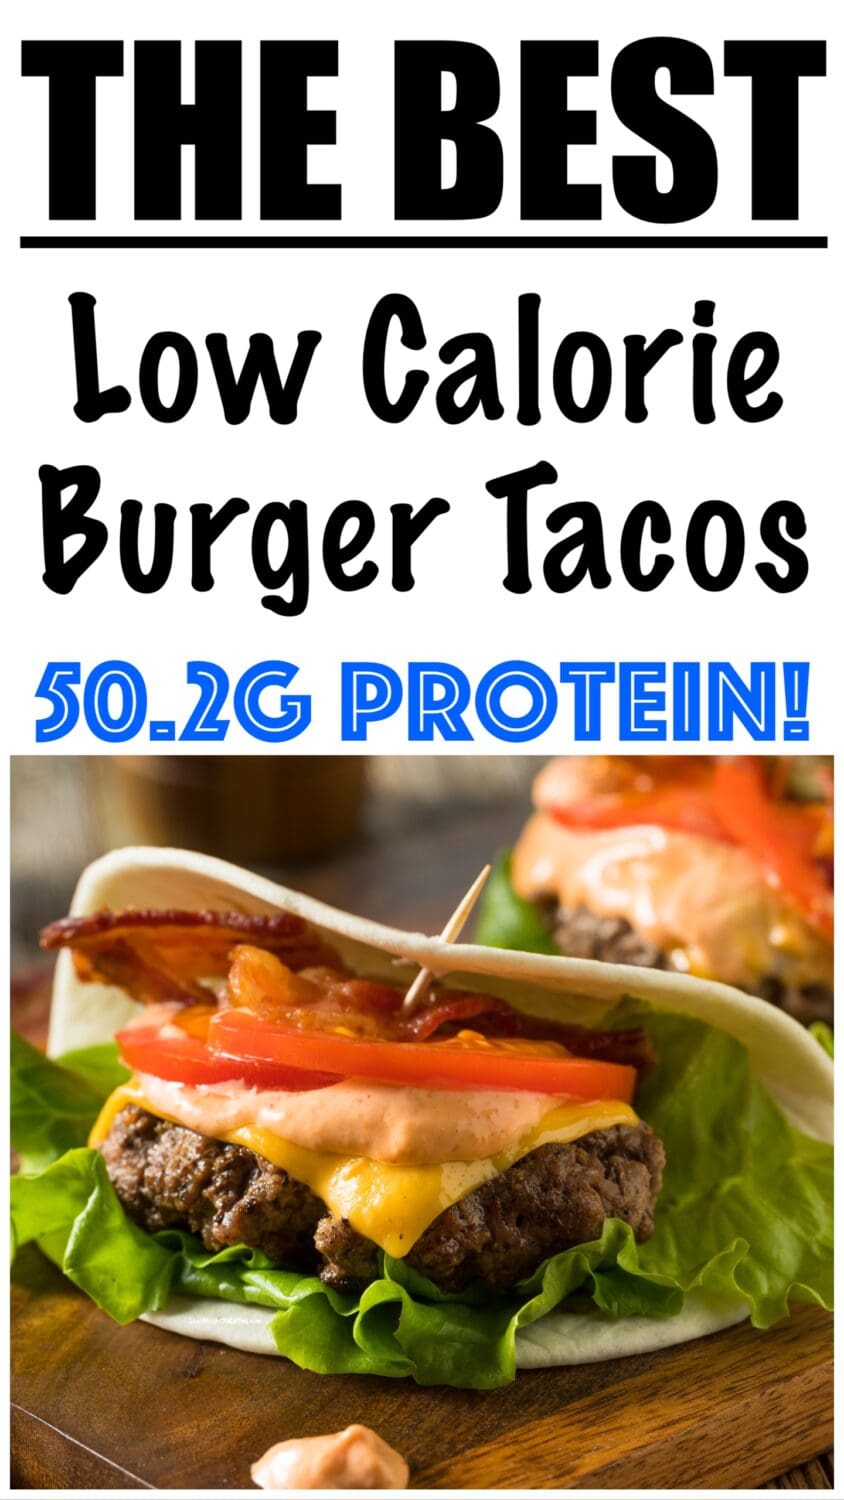 Low Calorie Burger Tacos